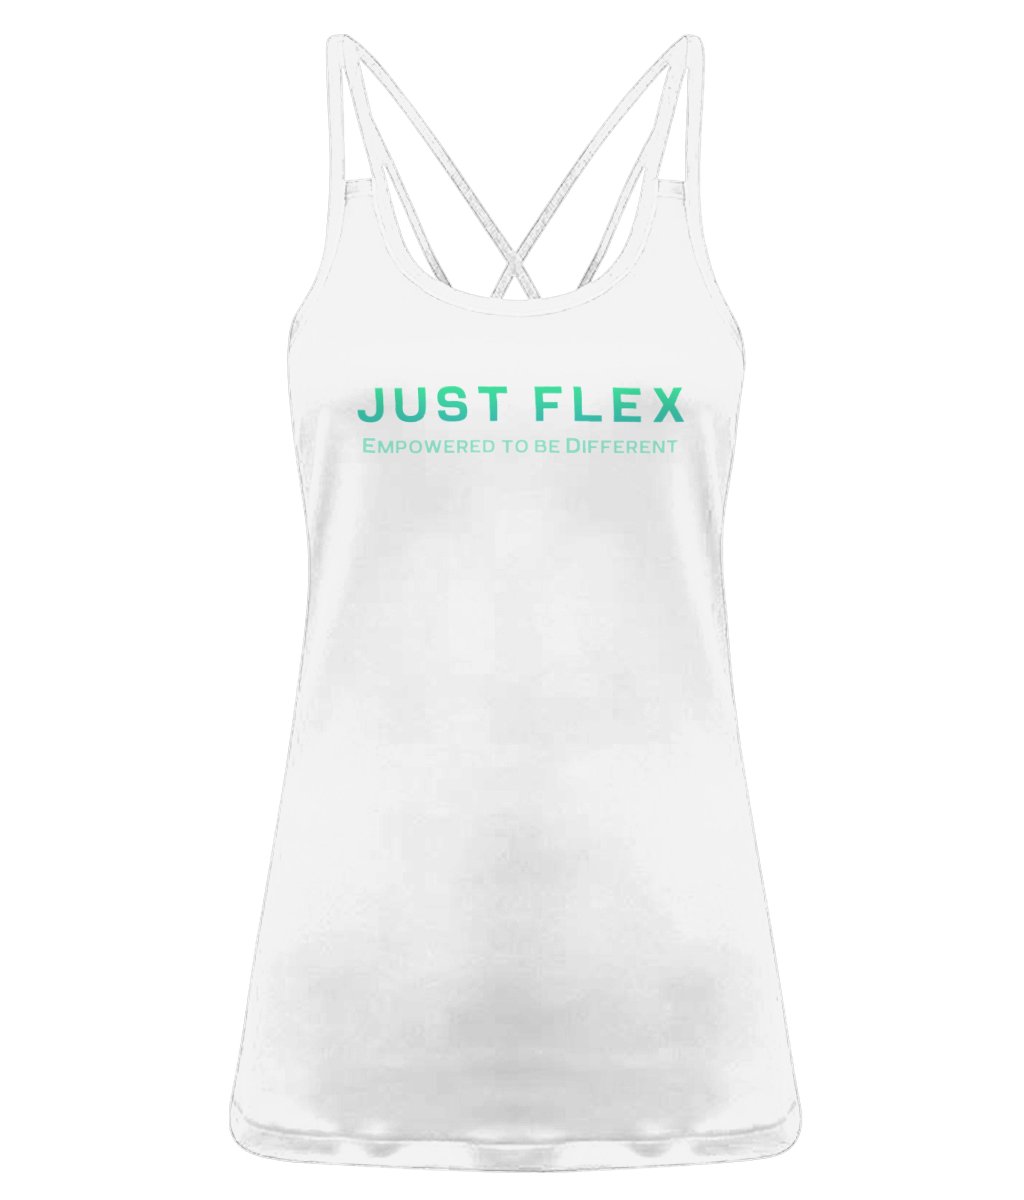 Just Flex - Empowered To Be Different Women's TriDri® 'Laser Cut' Spaghetti Strap Vest - Just Flex